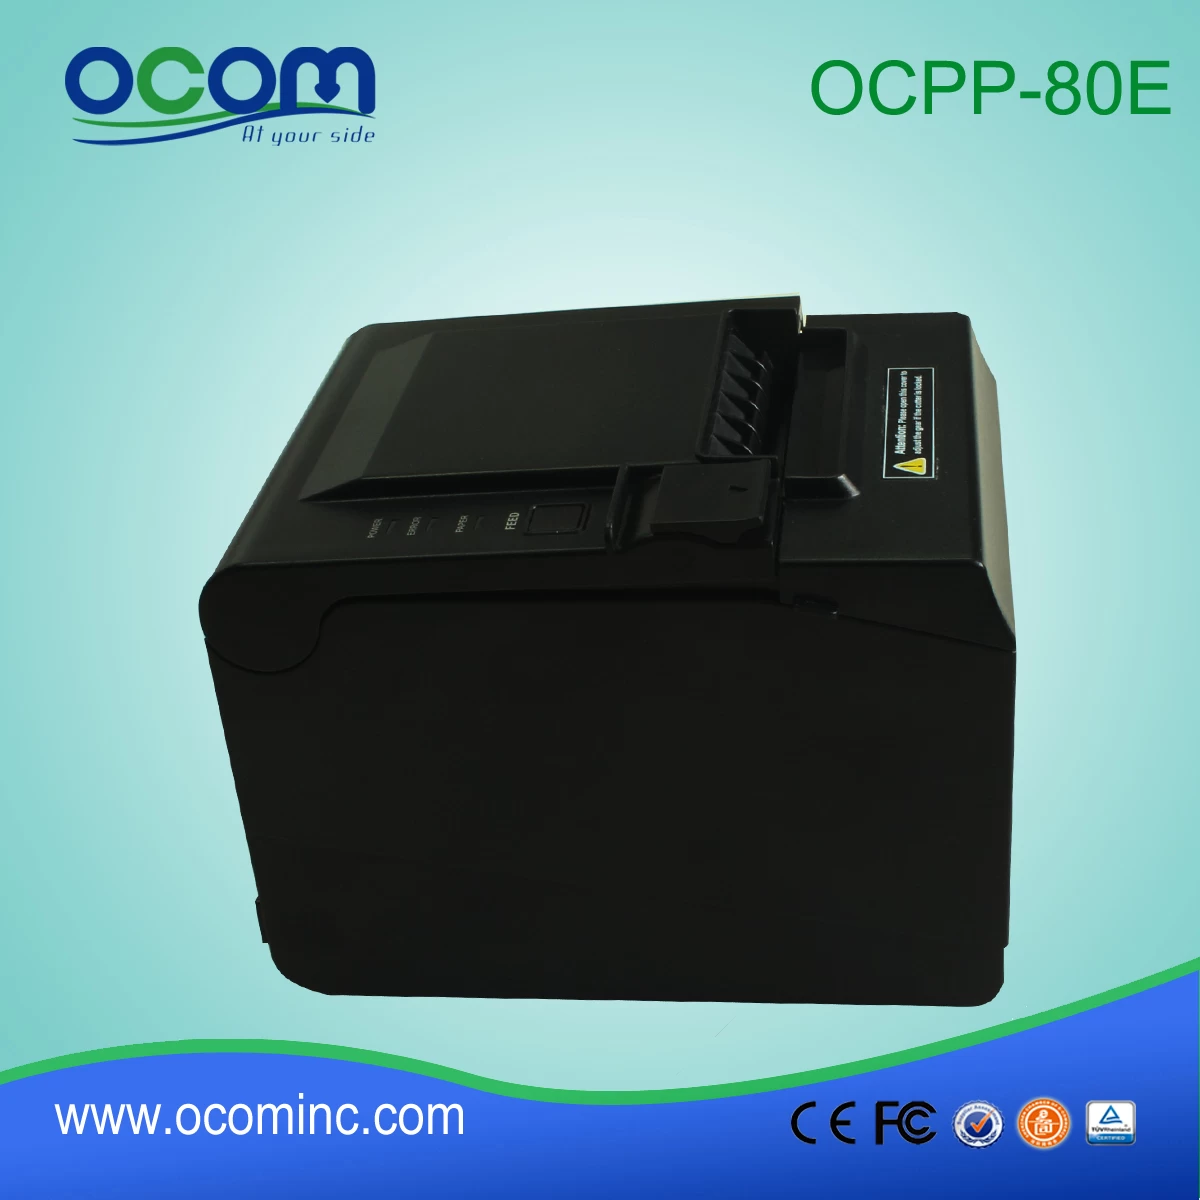 Auto Cutter Built-in 80mm POS Printer Machine (OCPP-80E)